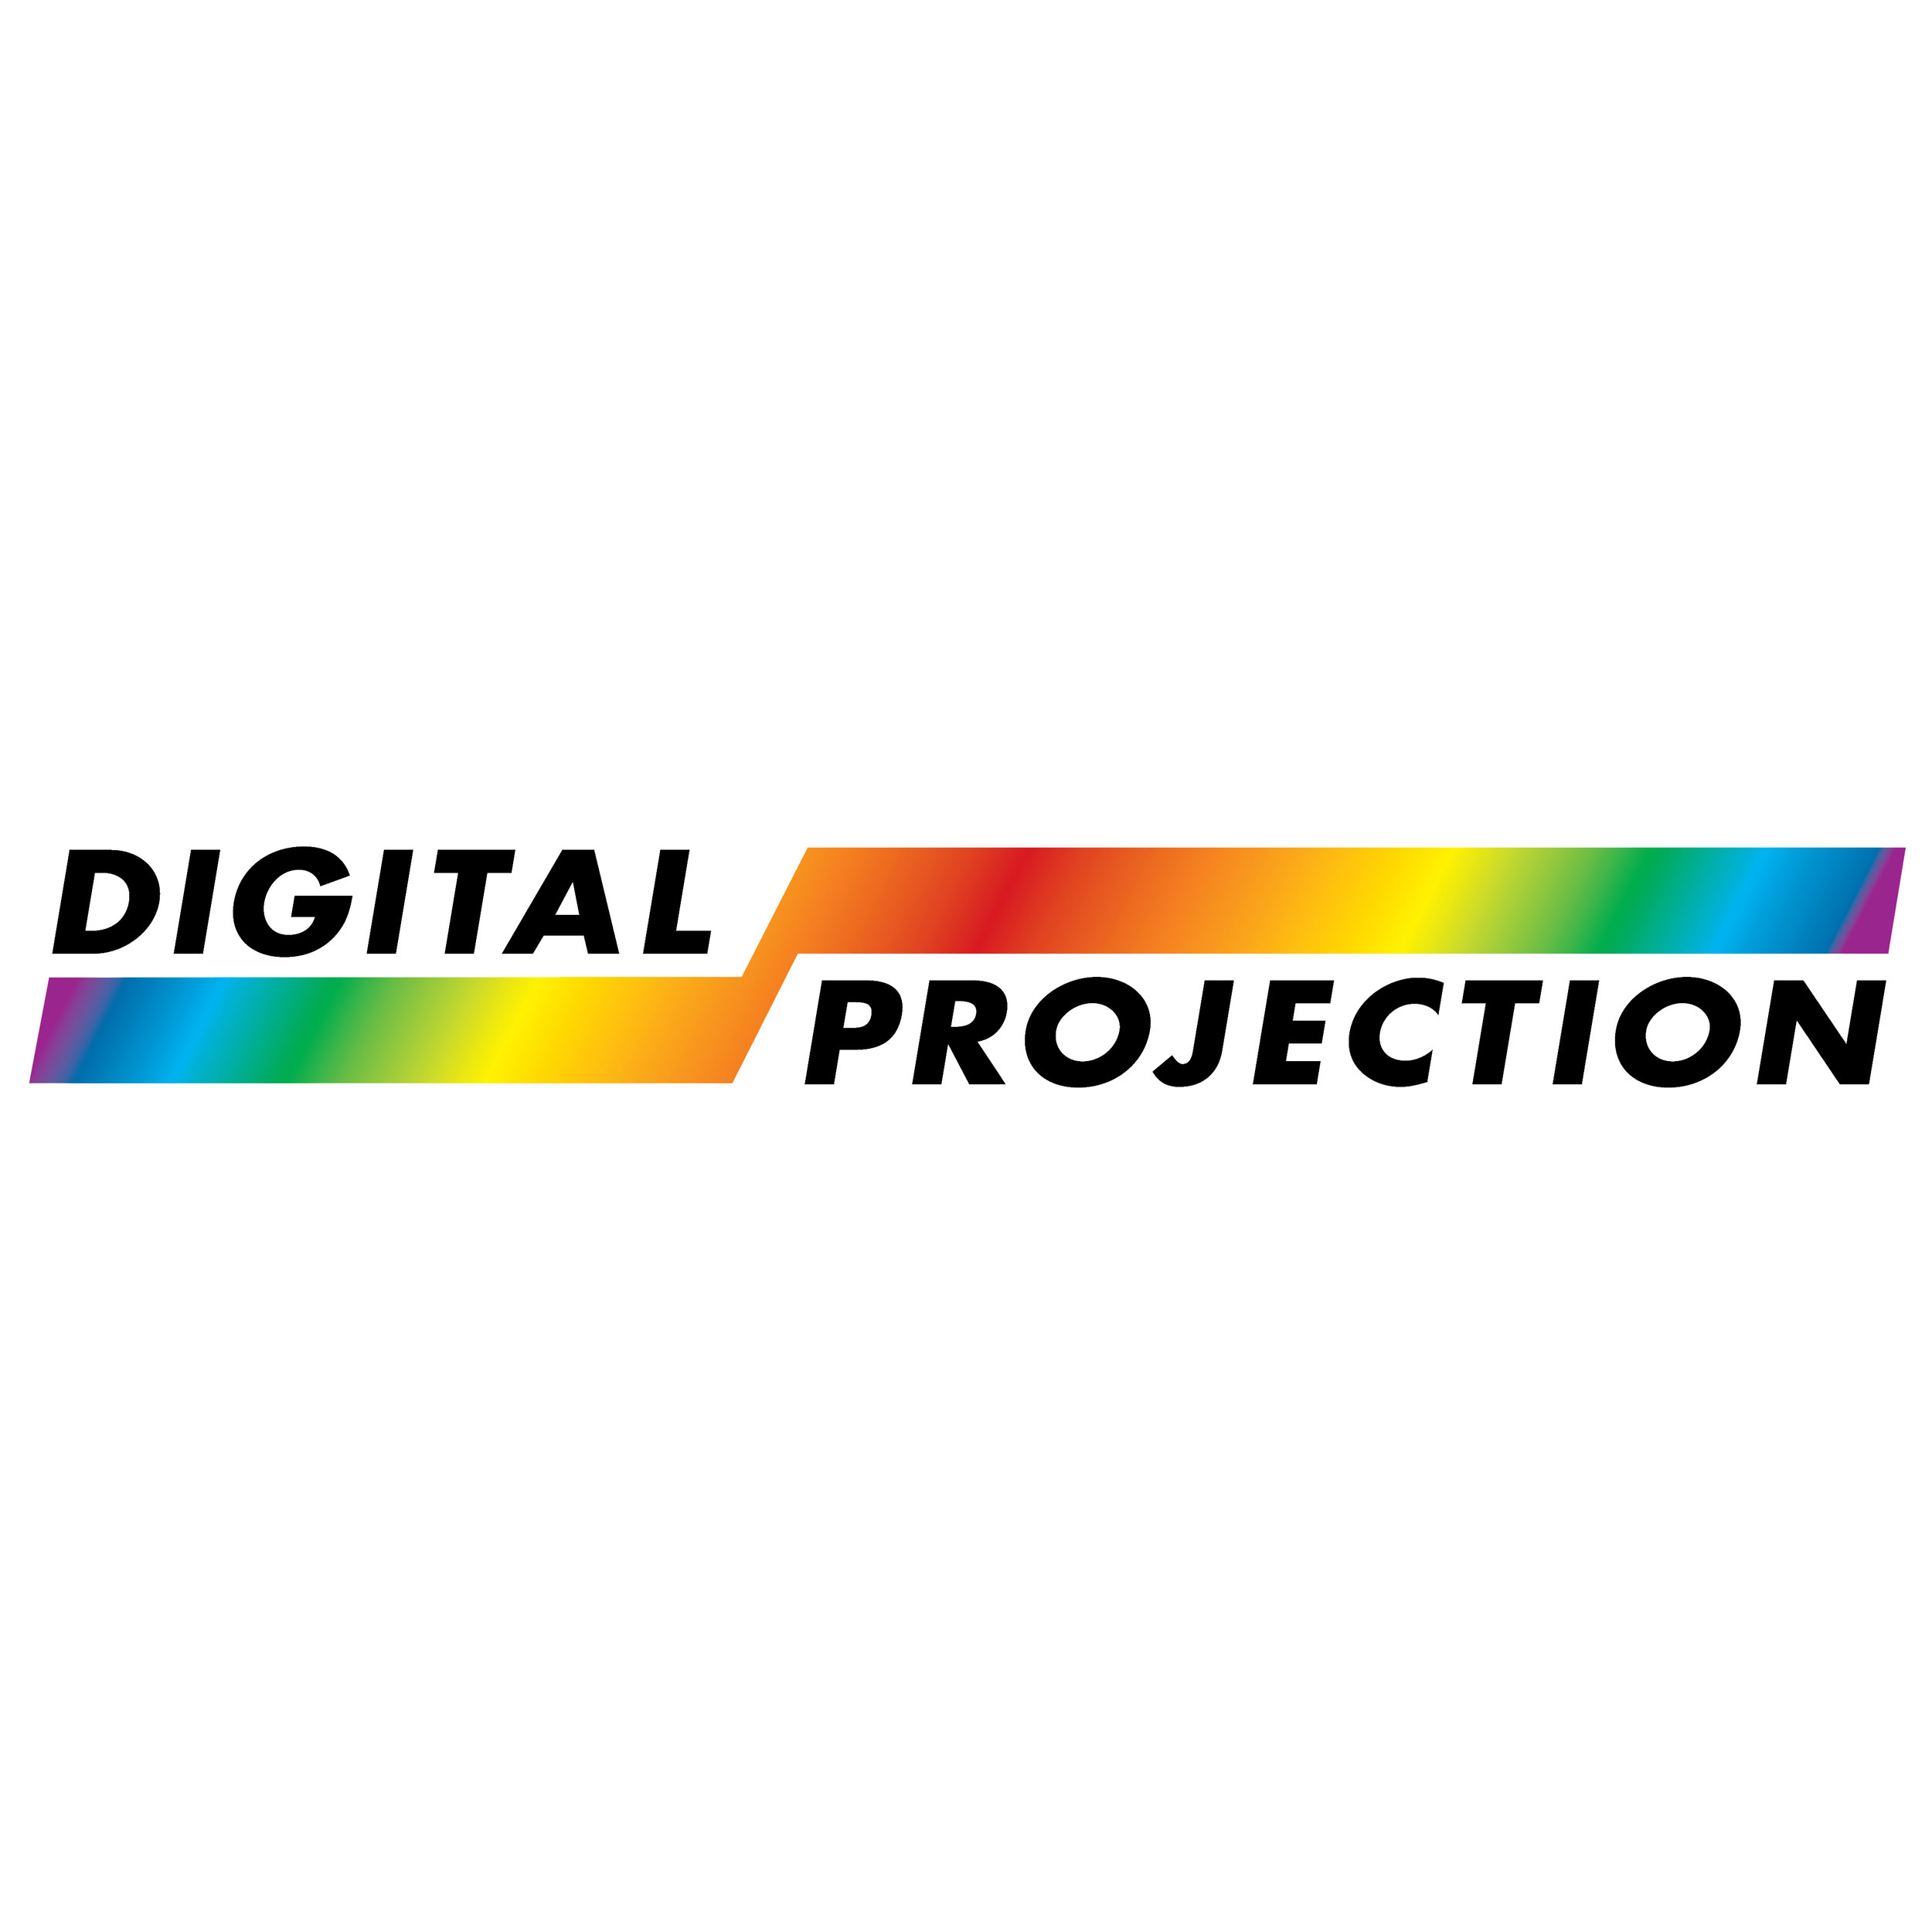 Digital Projection Logo 3738x3738.jpg